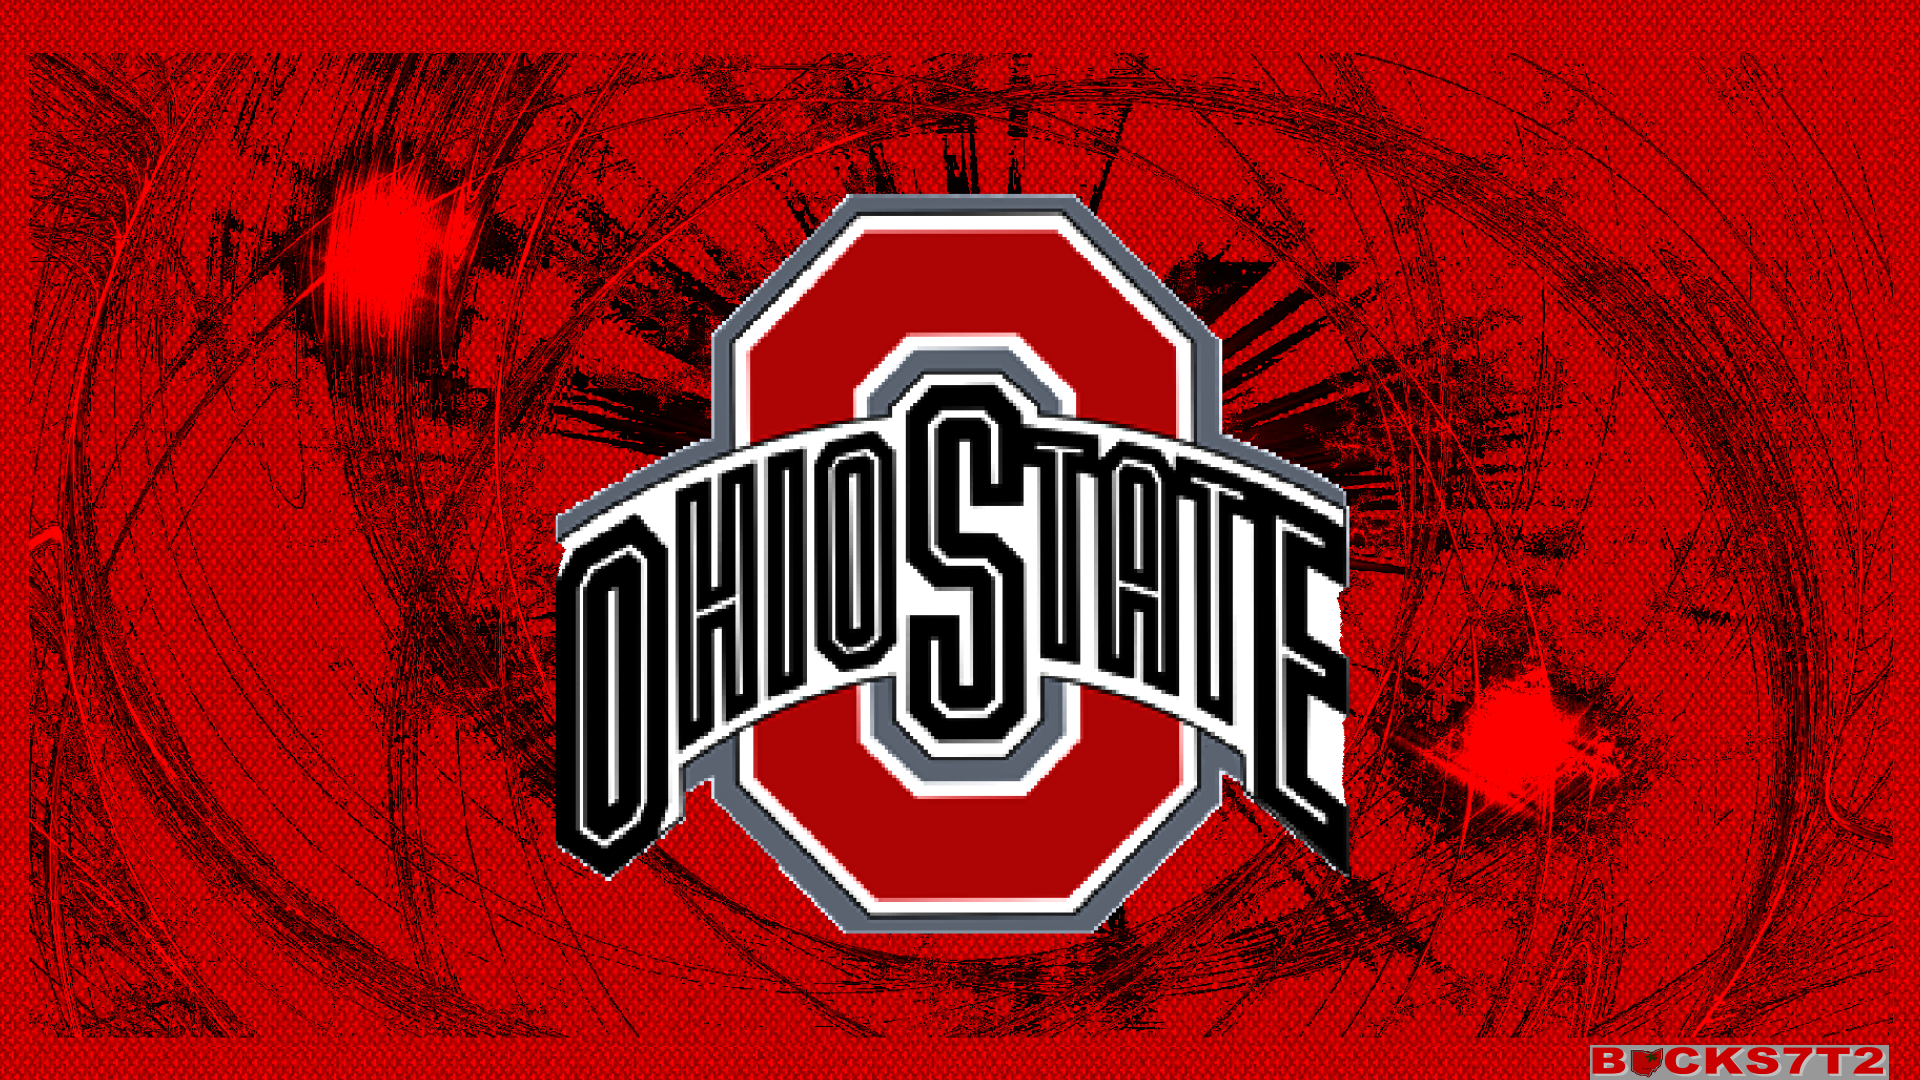 RED BLOCK O OHIO STATE   Ohio State University Basketball Wallpaper 1920x1080